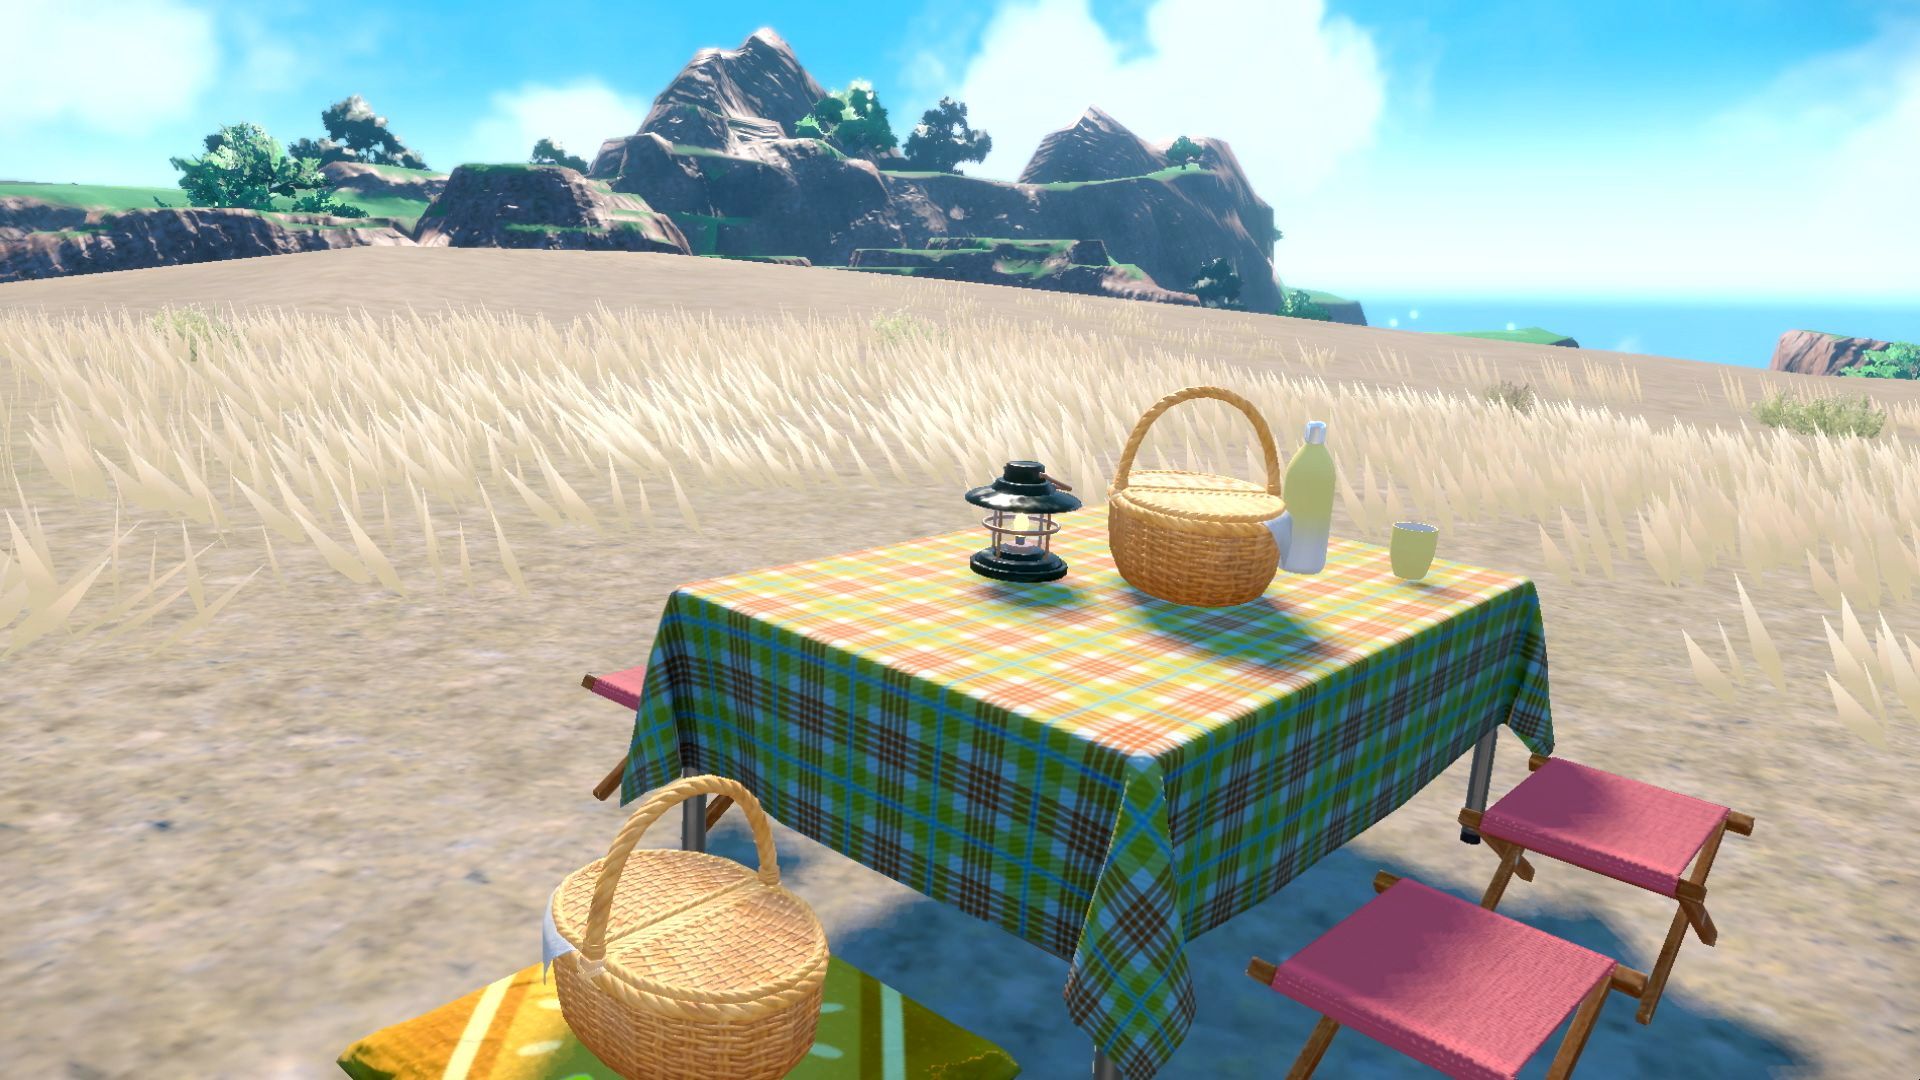 A picnic table set up on a grassy plain.